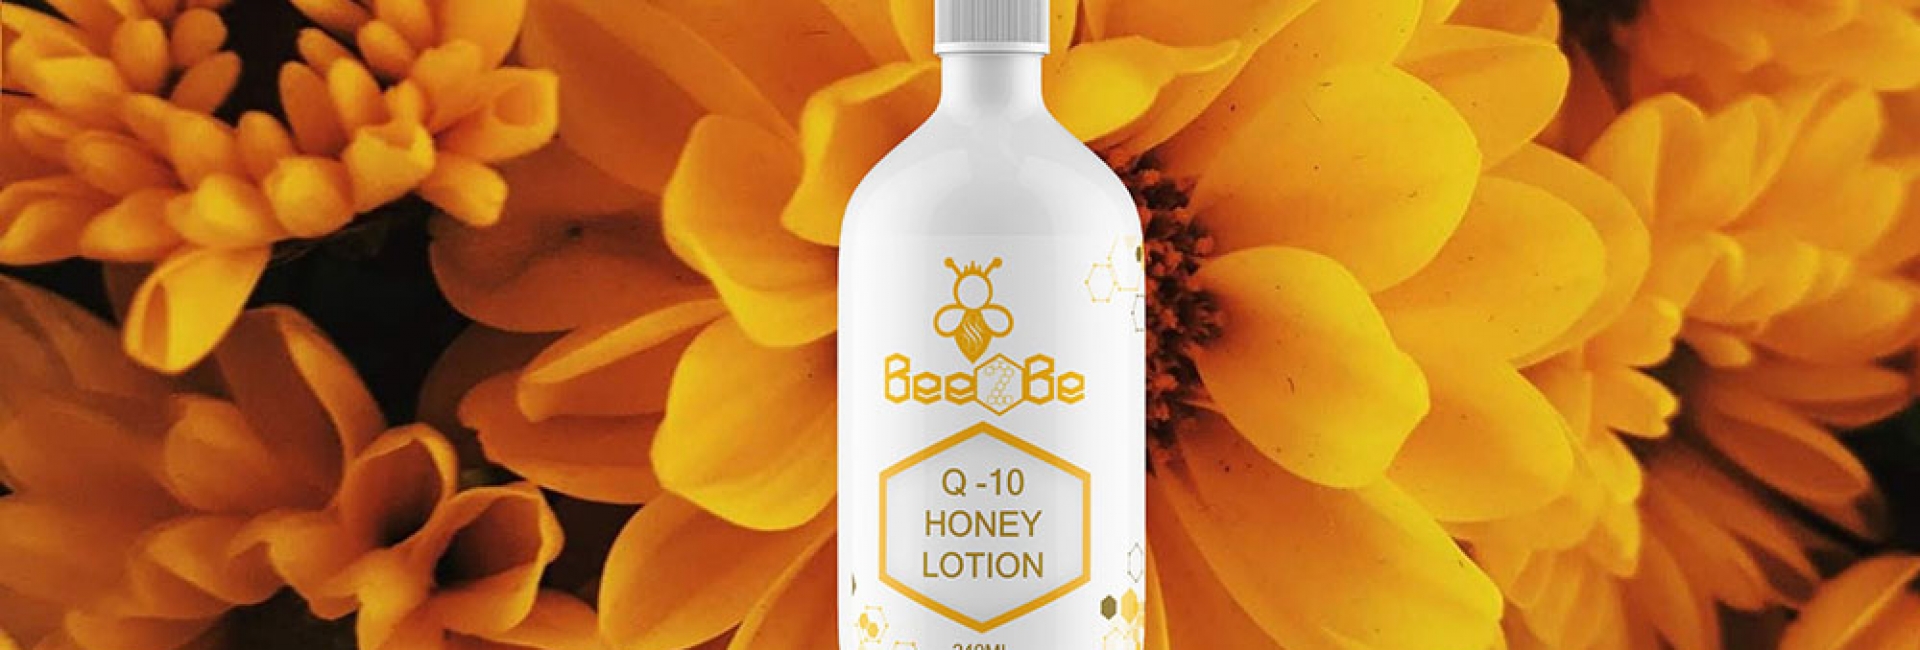 Q-10 Honey Lotion por Bee 2 Be